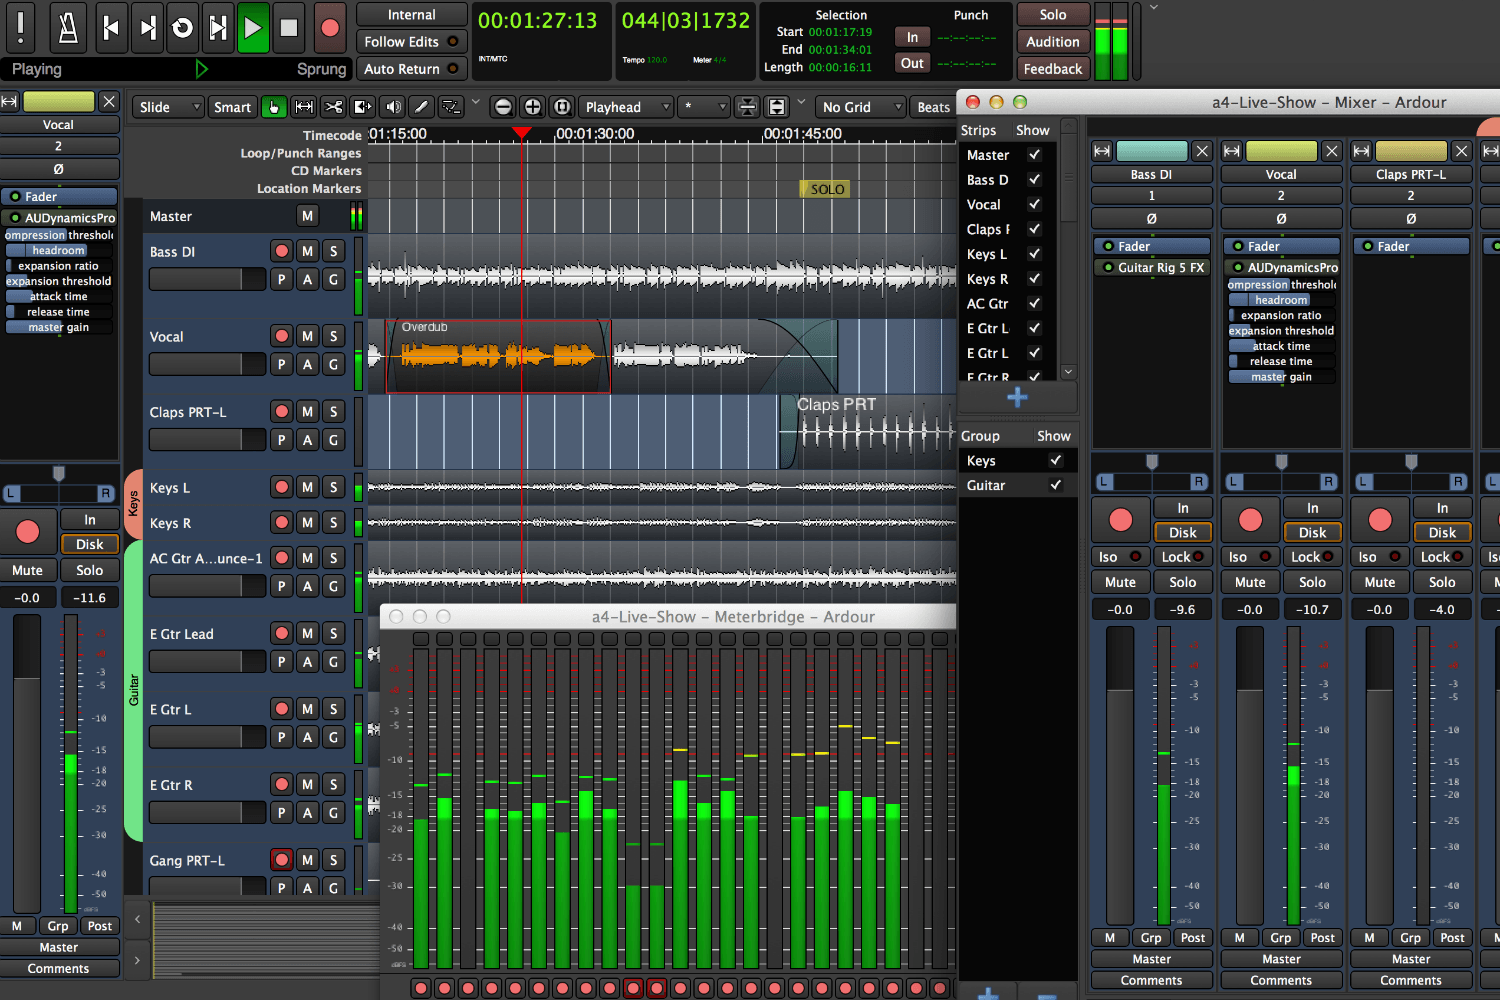 Recording Studio Software For Mac Free Download